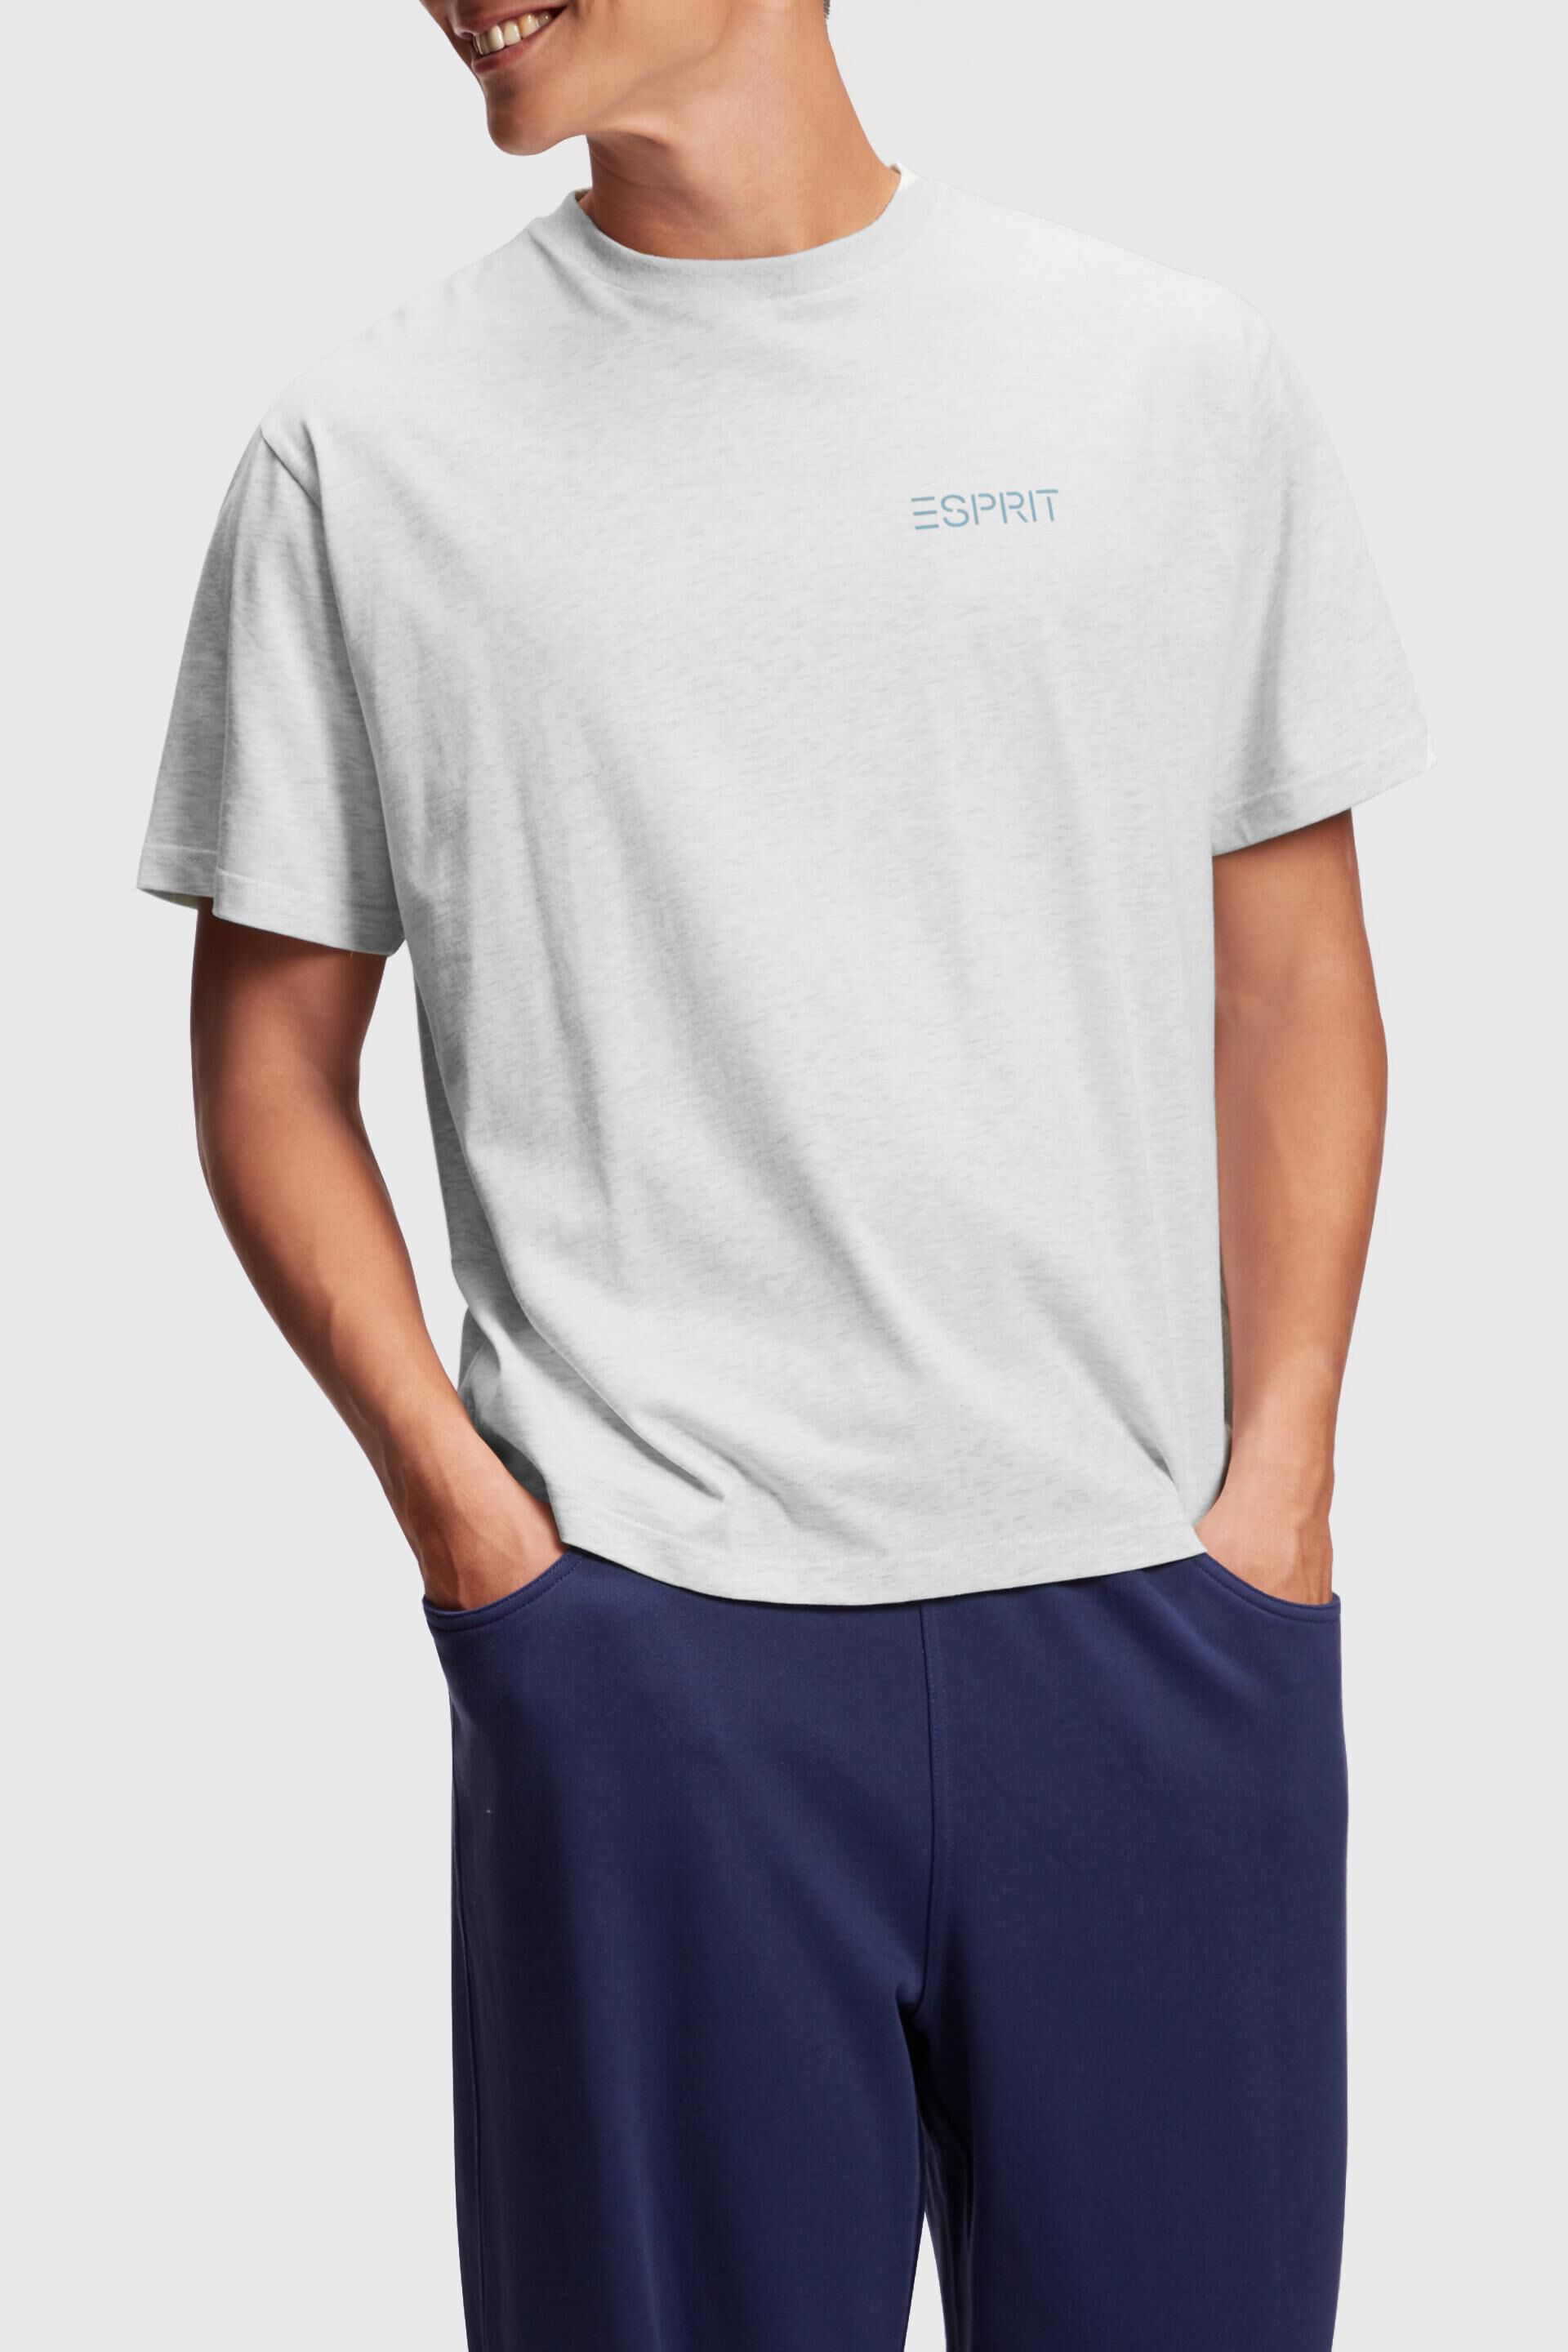 Esprit Edition print Seoul t-shirt